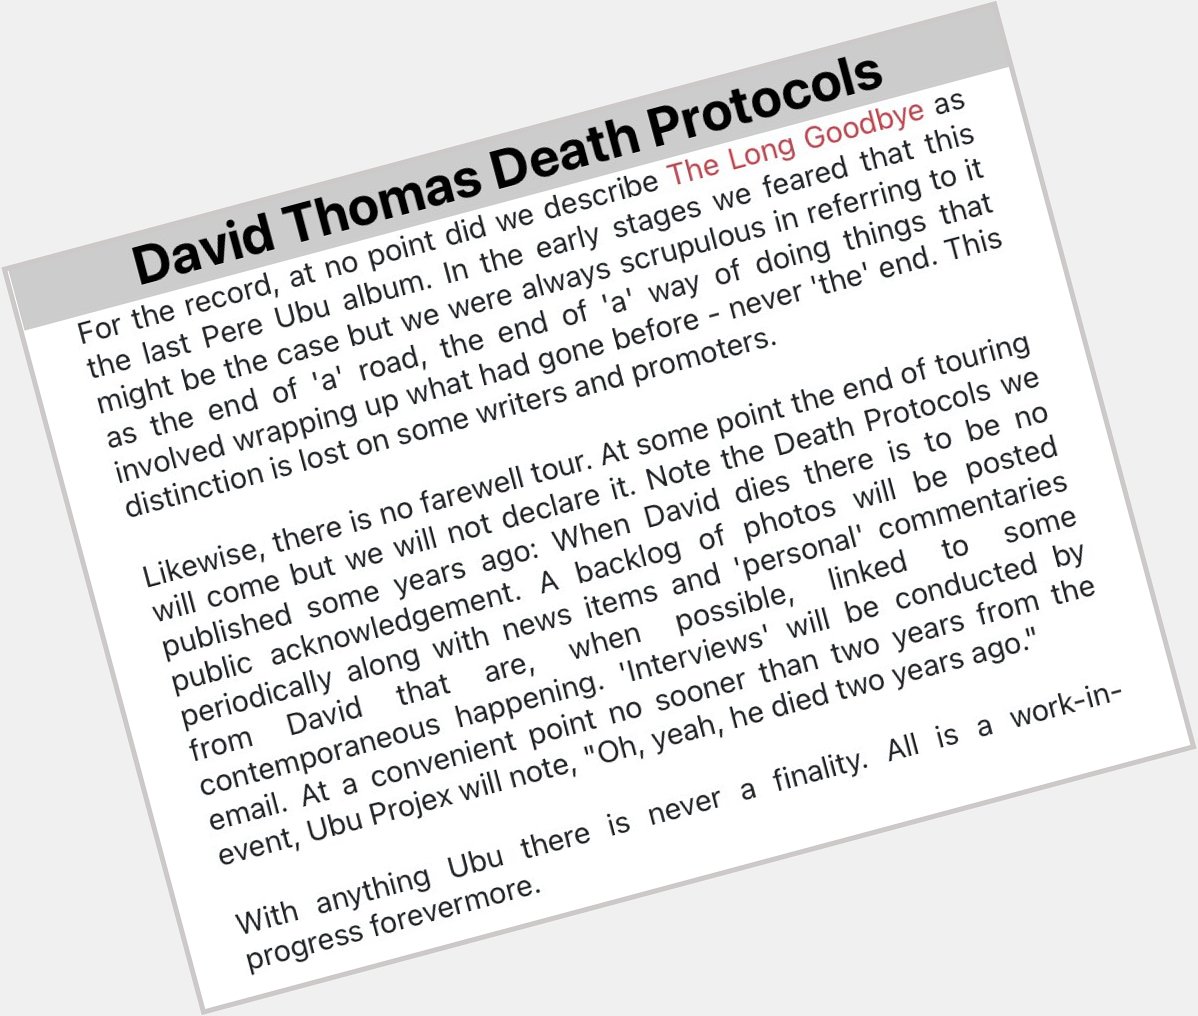 Happy 70th birthday to the great David Thomas, whom I assume is still alive. 